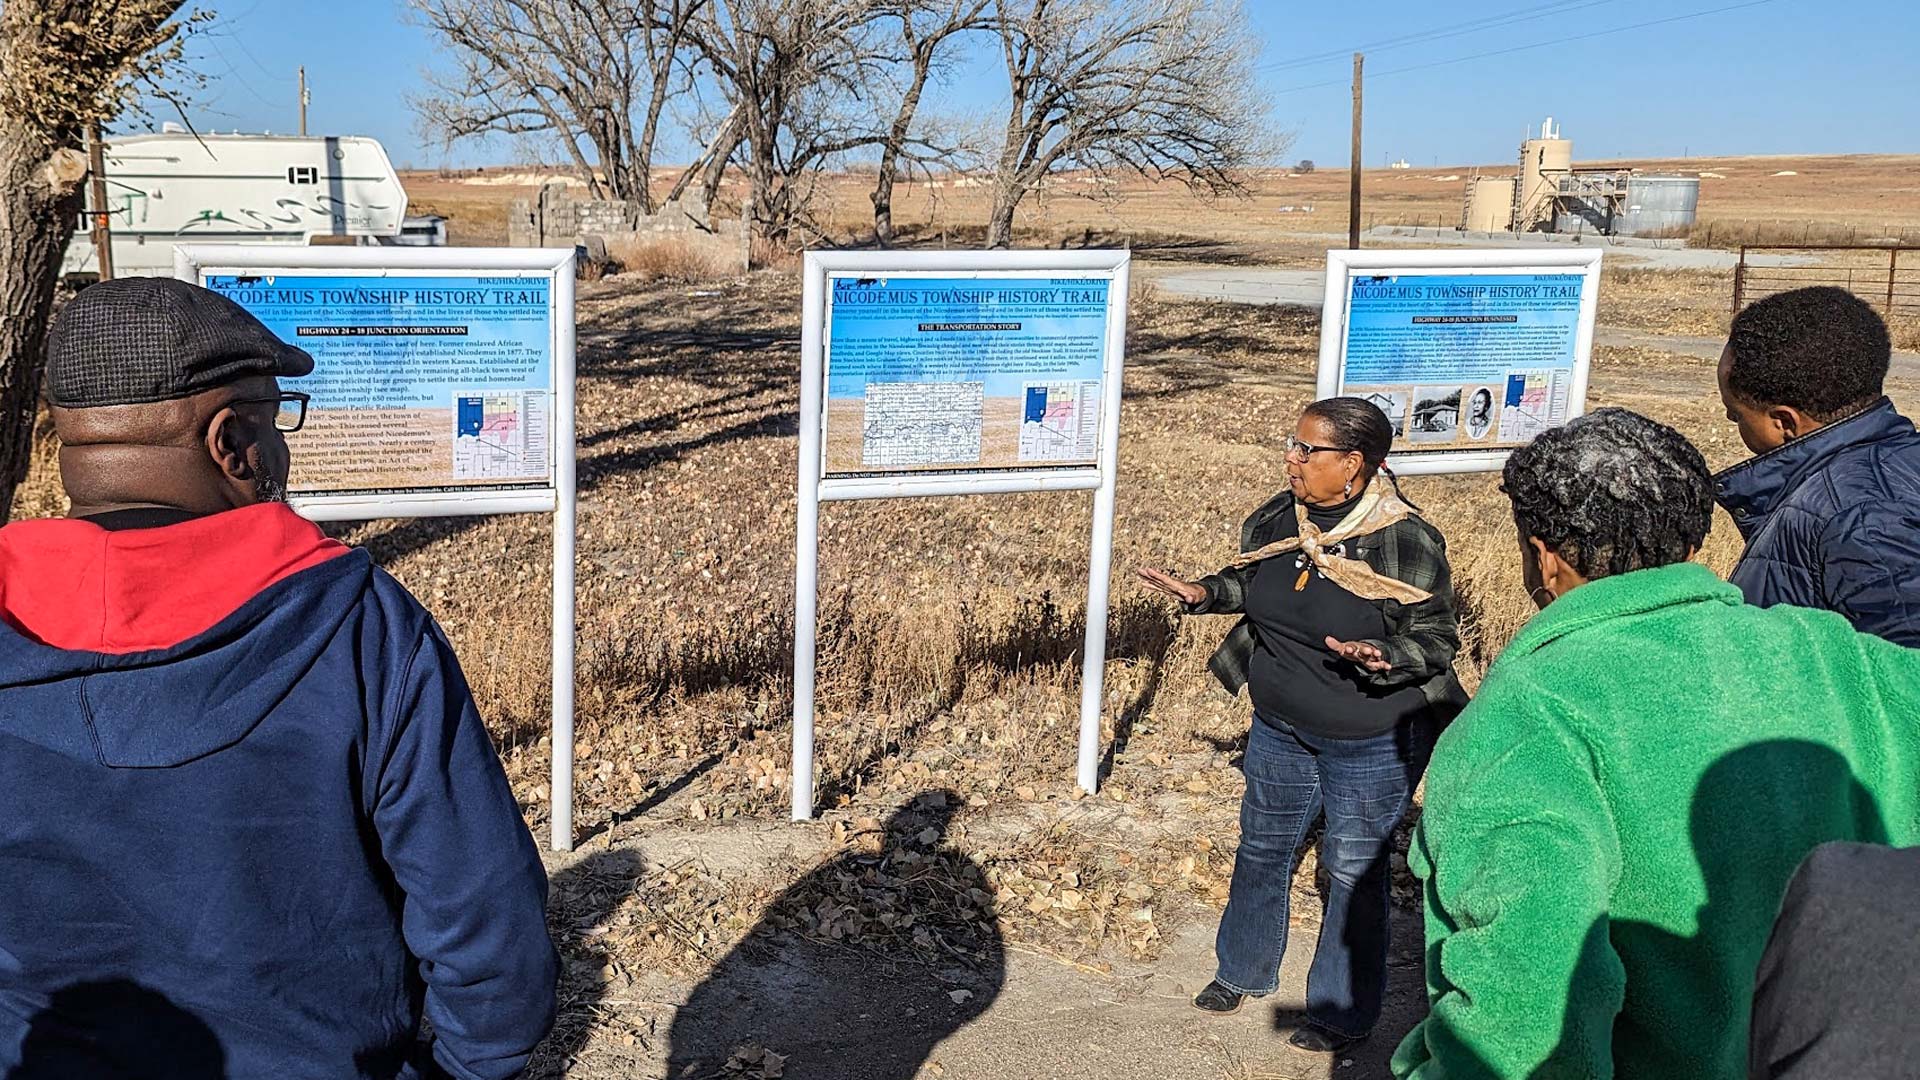 A tour guide gives a presentation near the Nicodemus Trail signs.